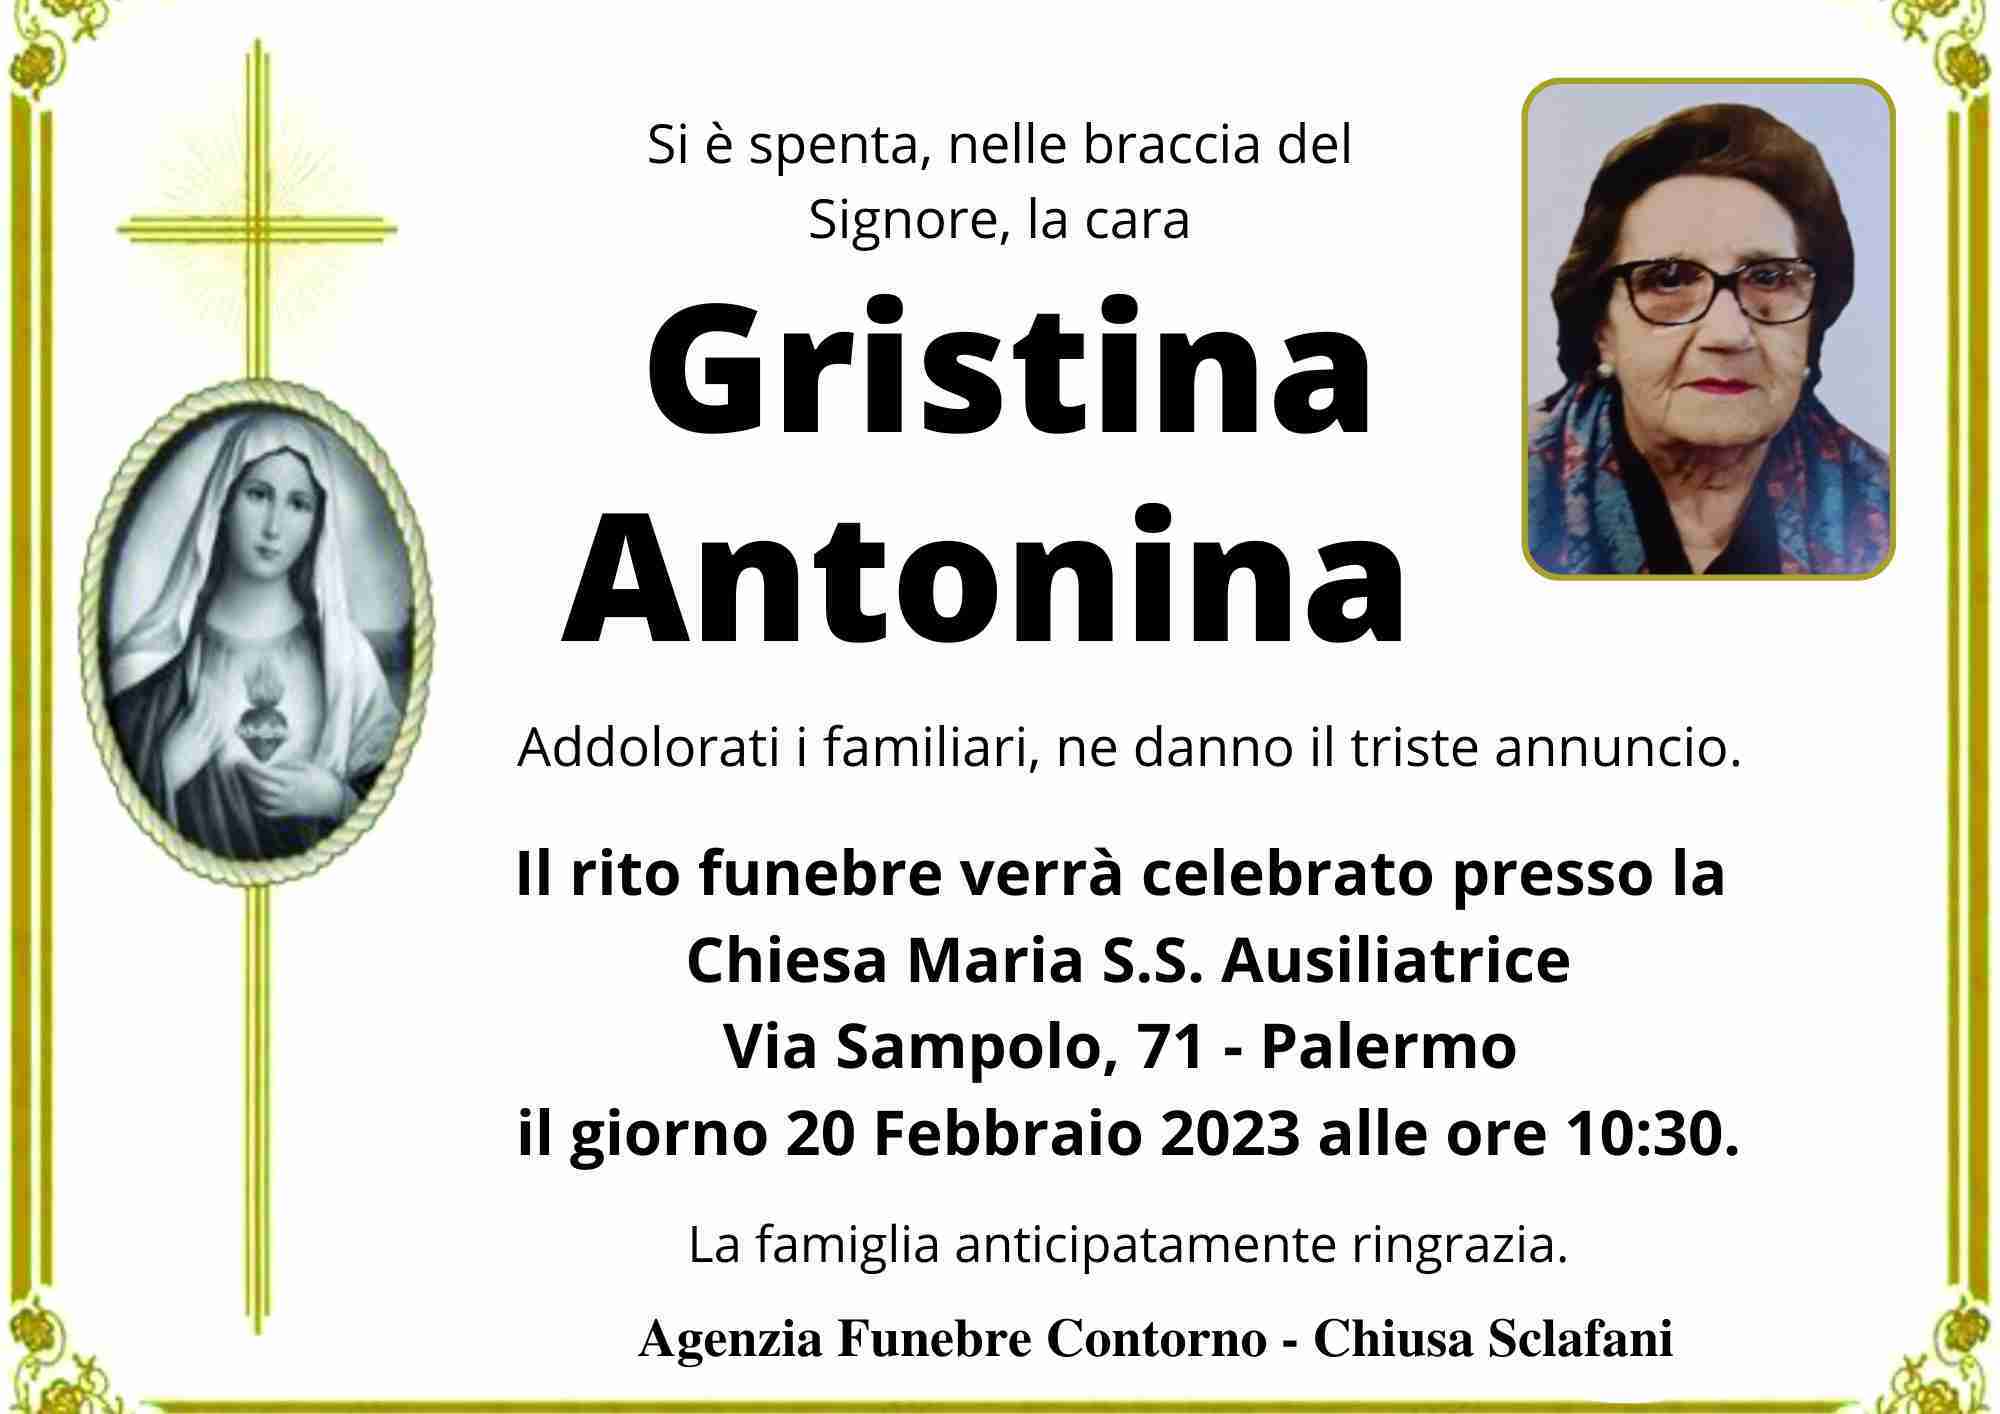 Antonina Gristina